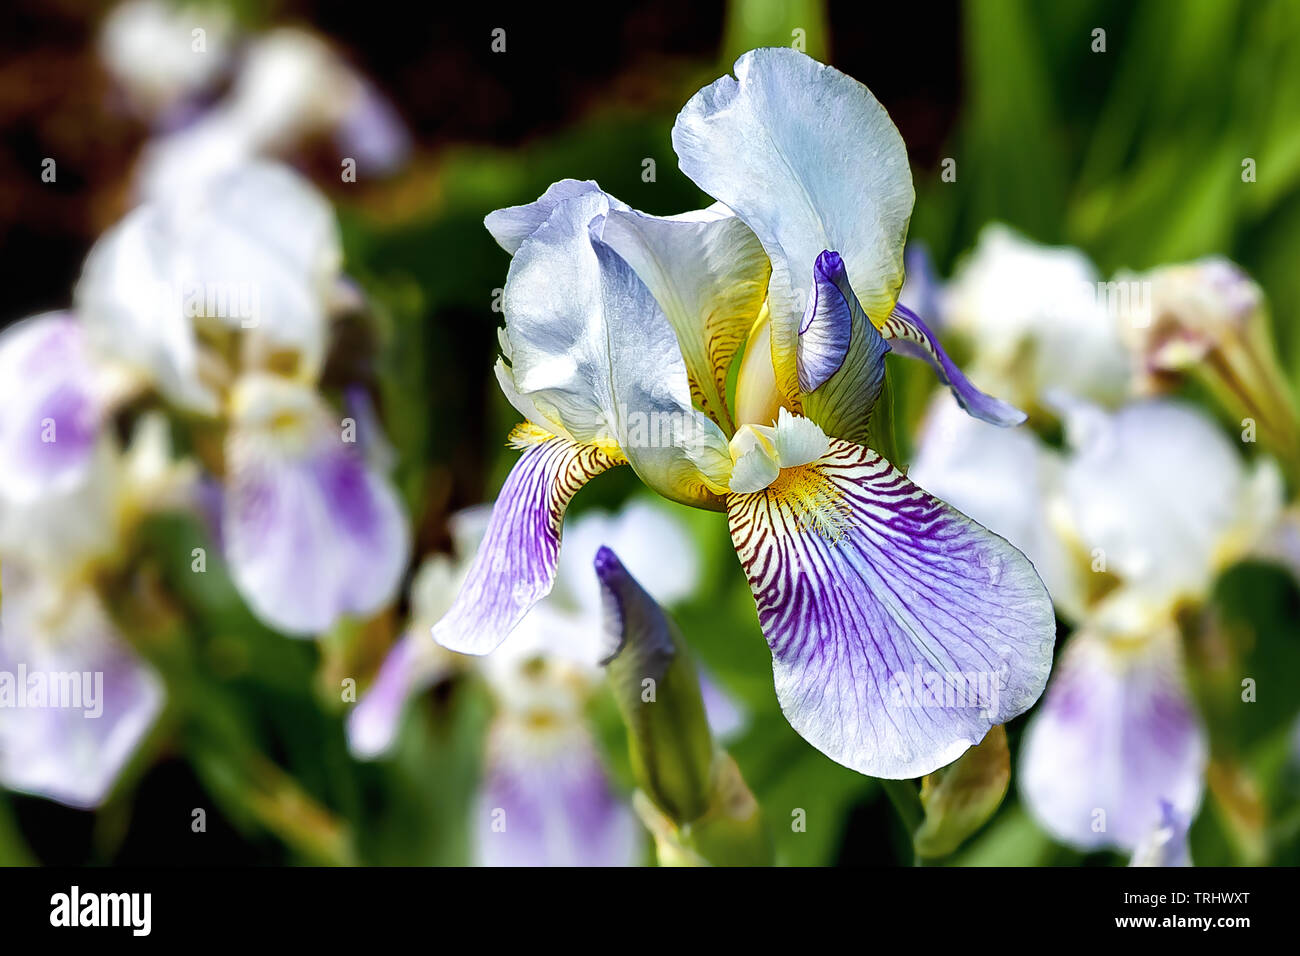 The flower of white-blue iris, close-up Stock Photo